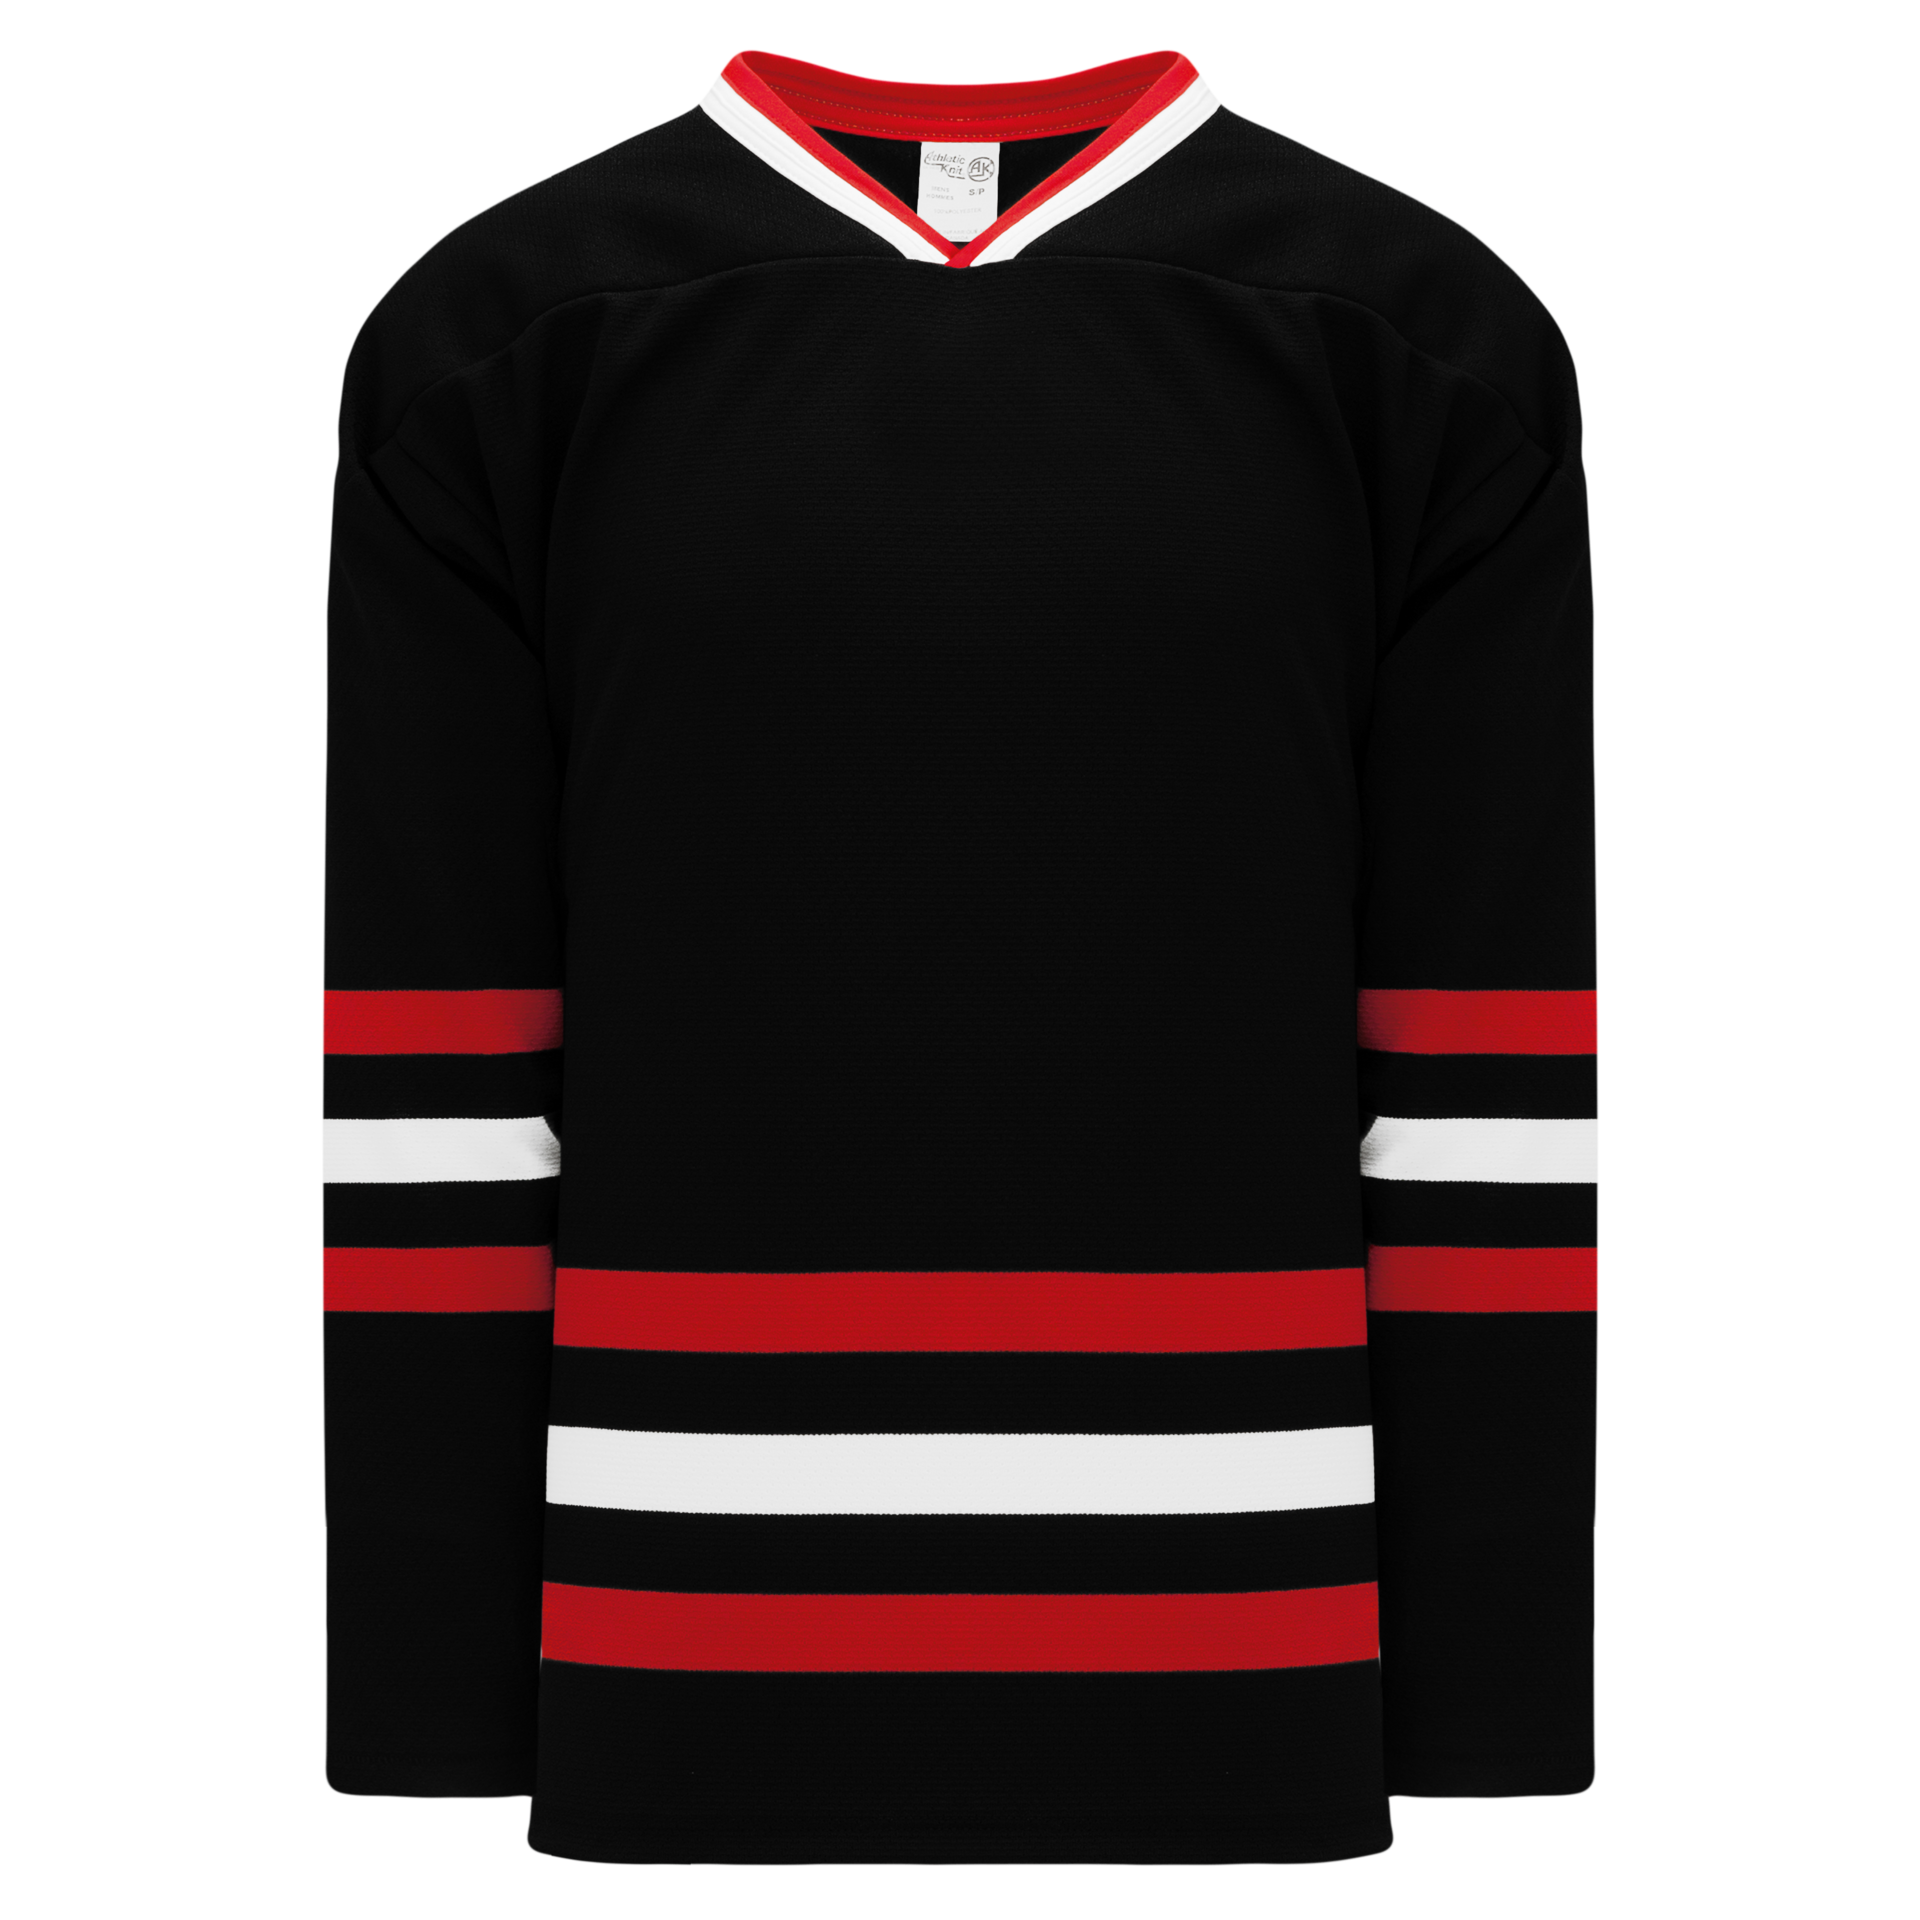 JERSEY KHL - custom-made ice hockey jerseys - Jersey 53